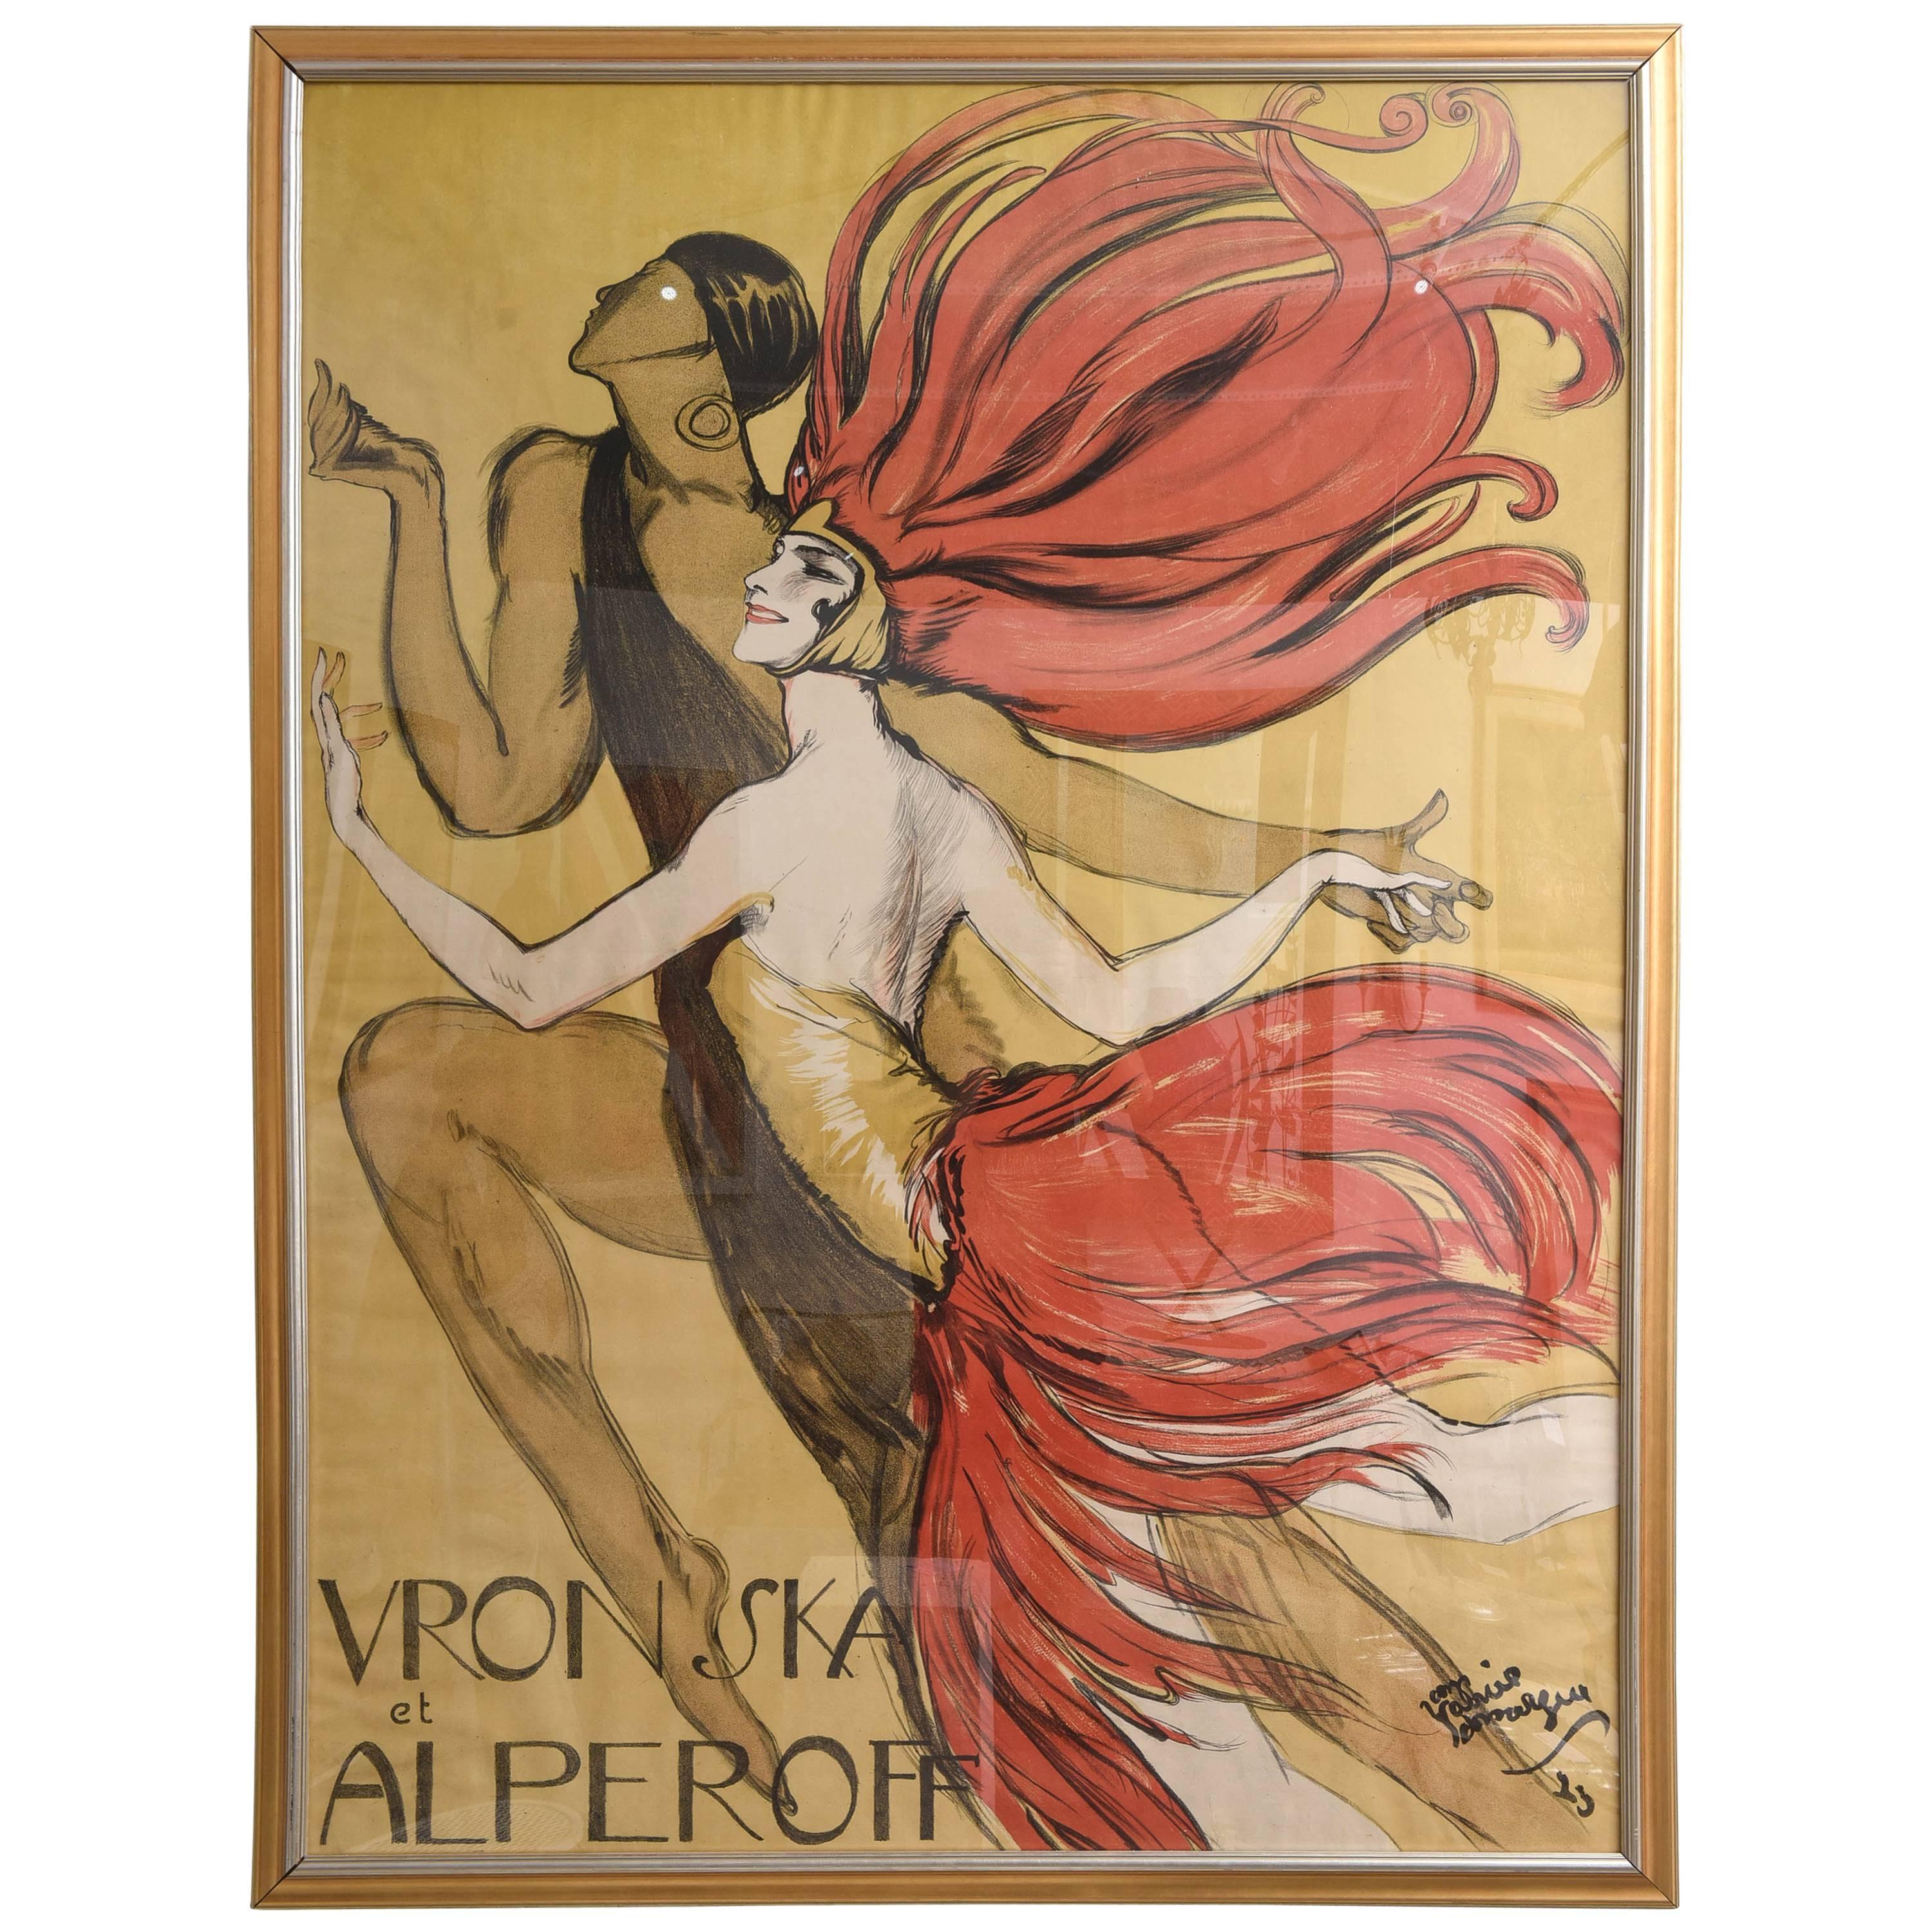 Original French Poster "Vronska et Alperoff" by Jean-Gabriel Domergue circa 1923